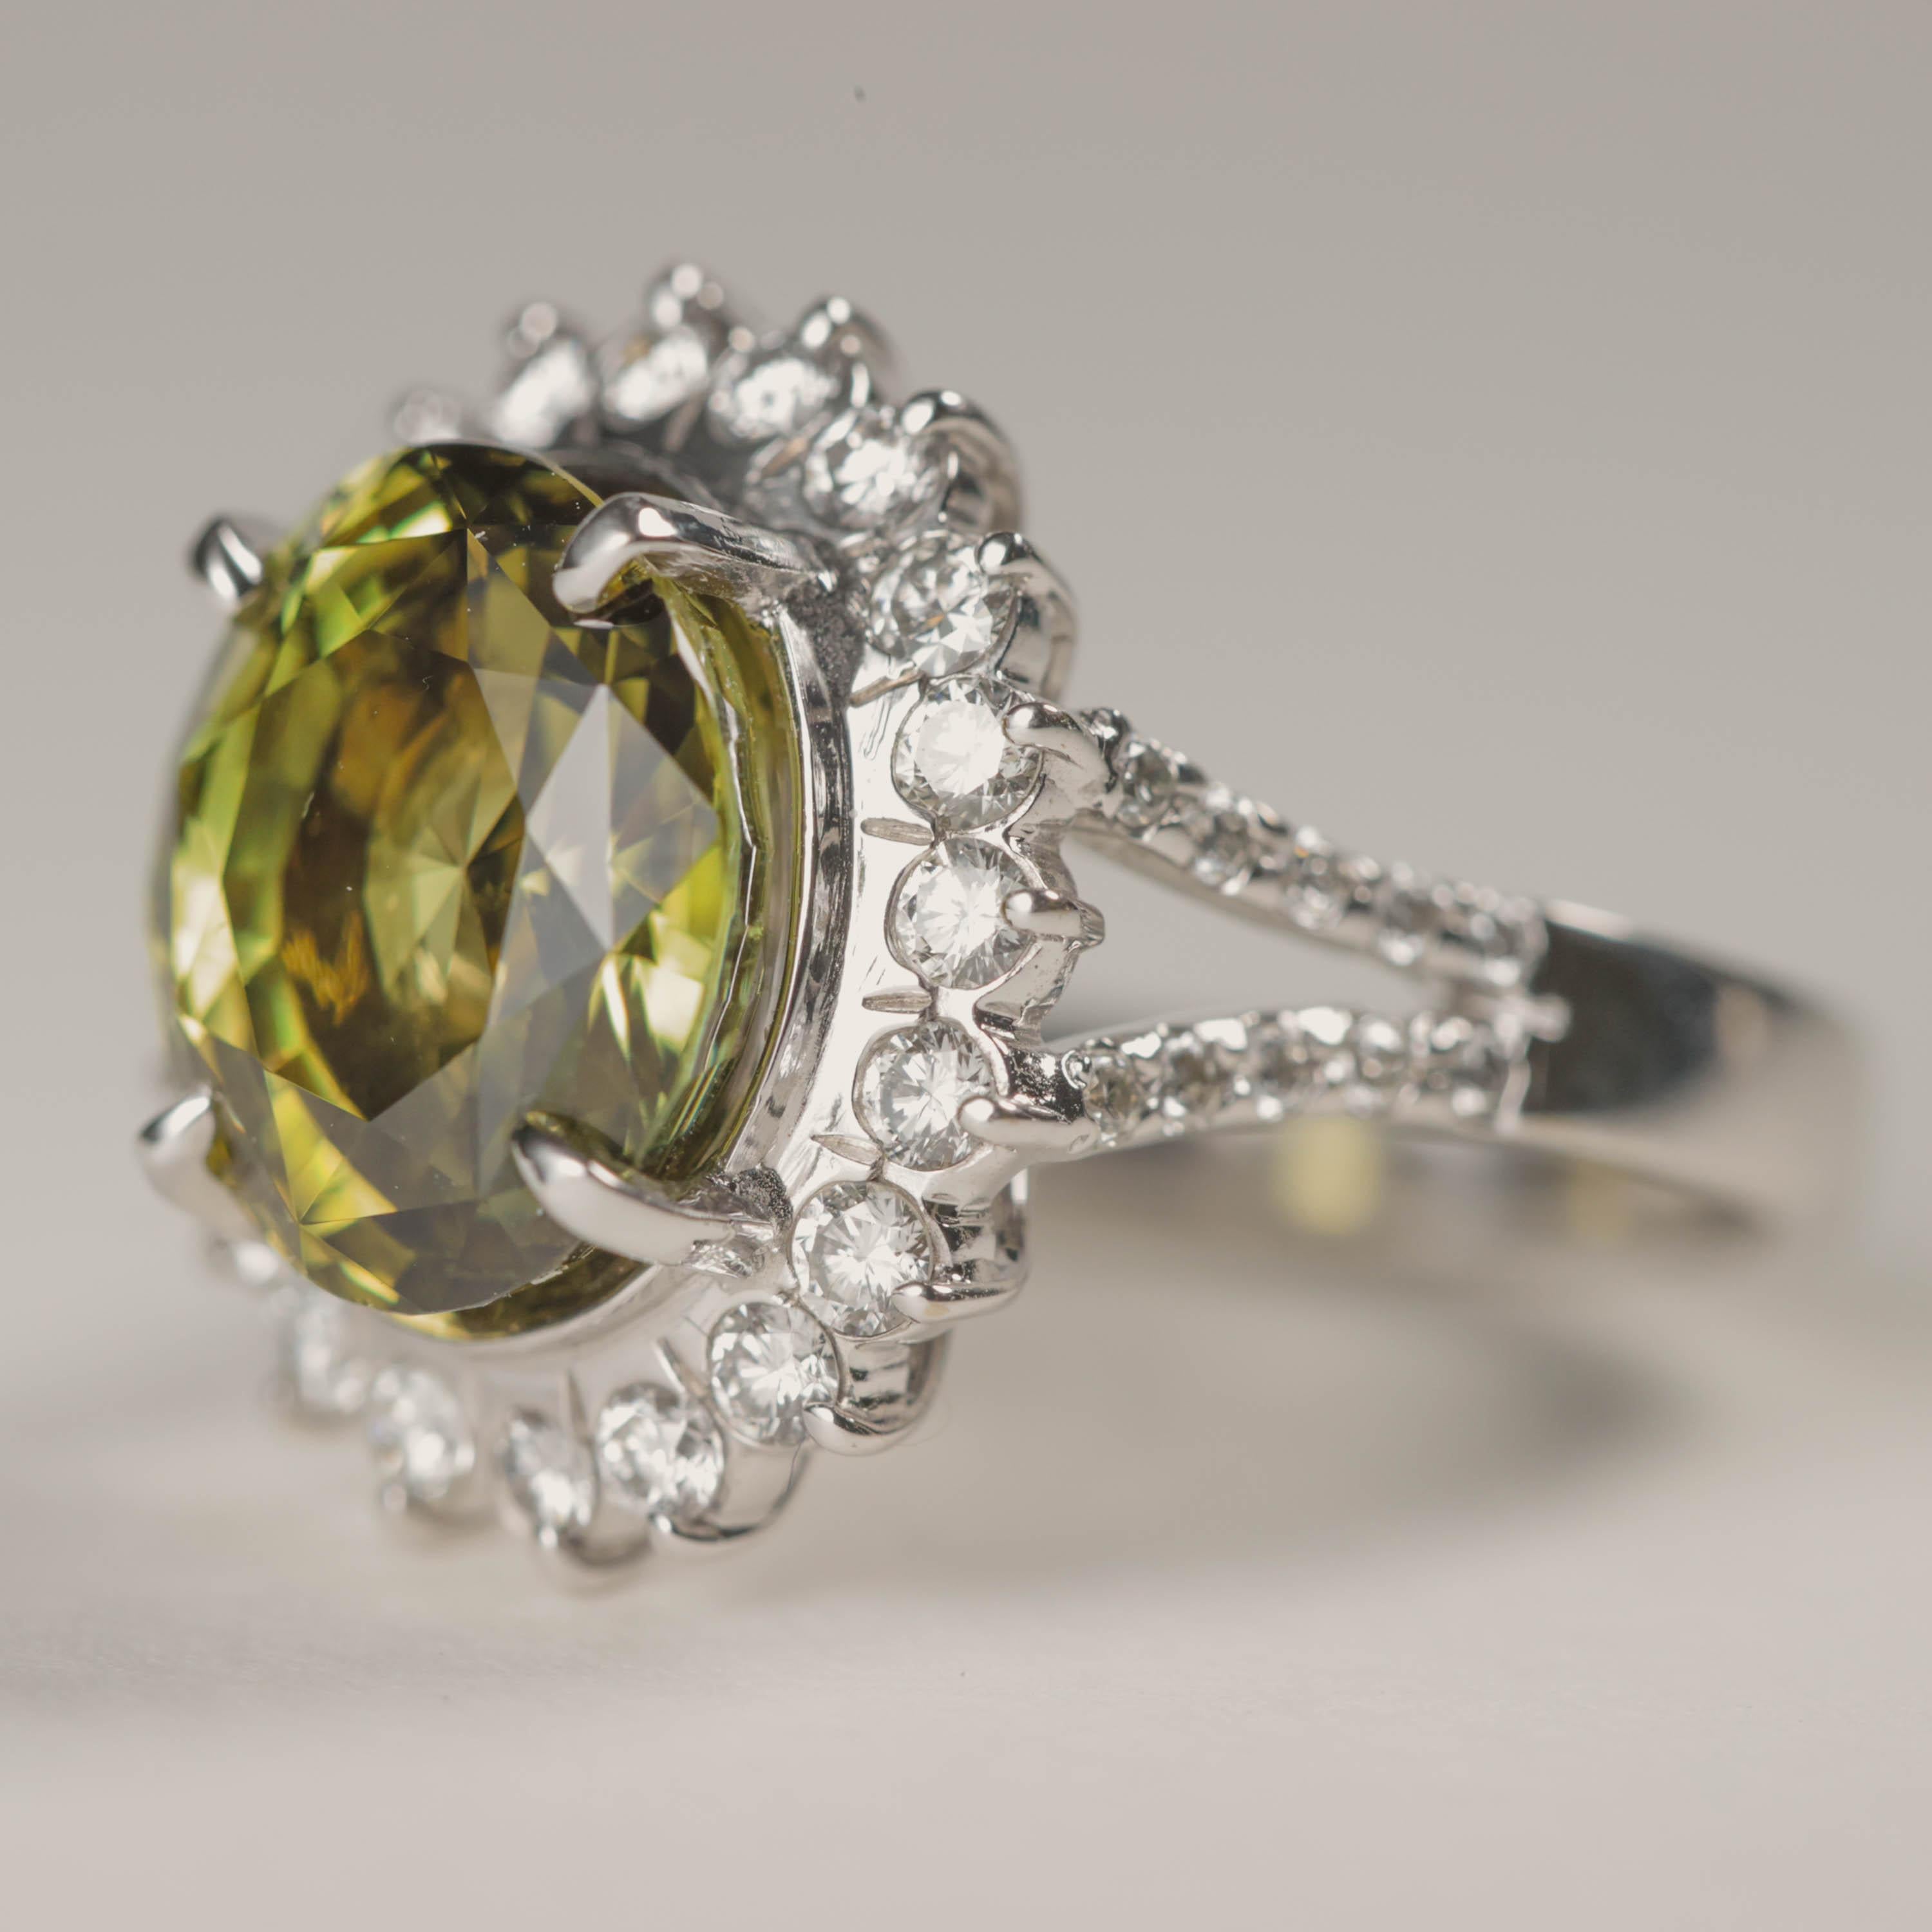 Alexandrite & Diamond Ring 7.35 Carats, Rare Color Change Gem Certified 5